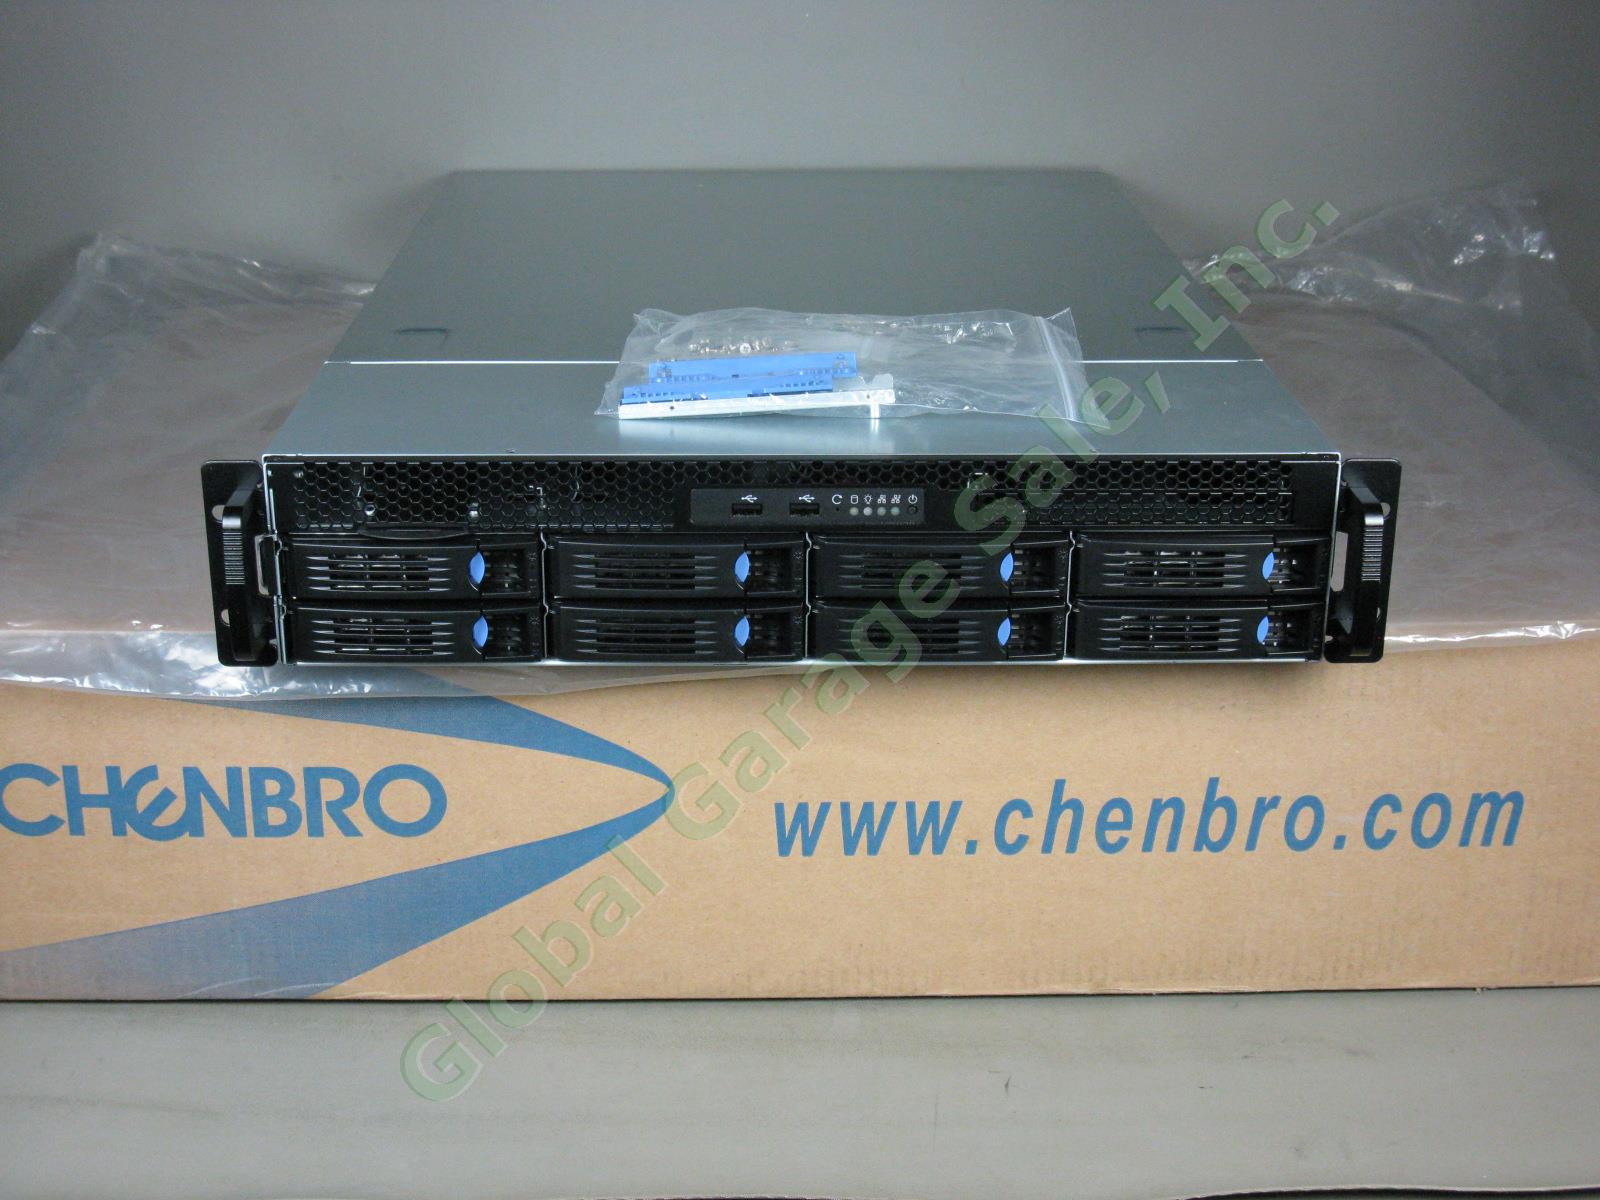 NEW Chenbro RM23608 2U 8-Bay Hot Swap Rack Mount Server Case Chassis SSI EEB